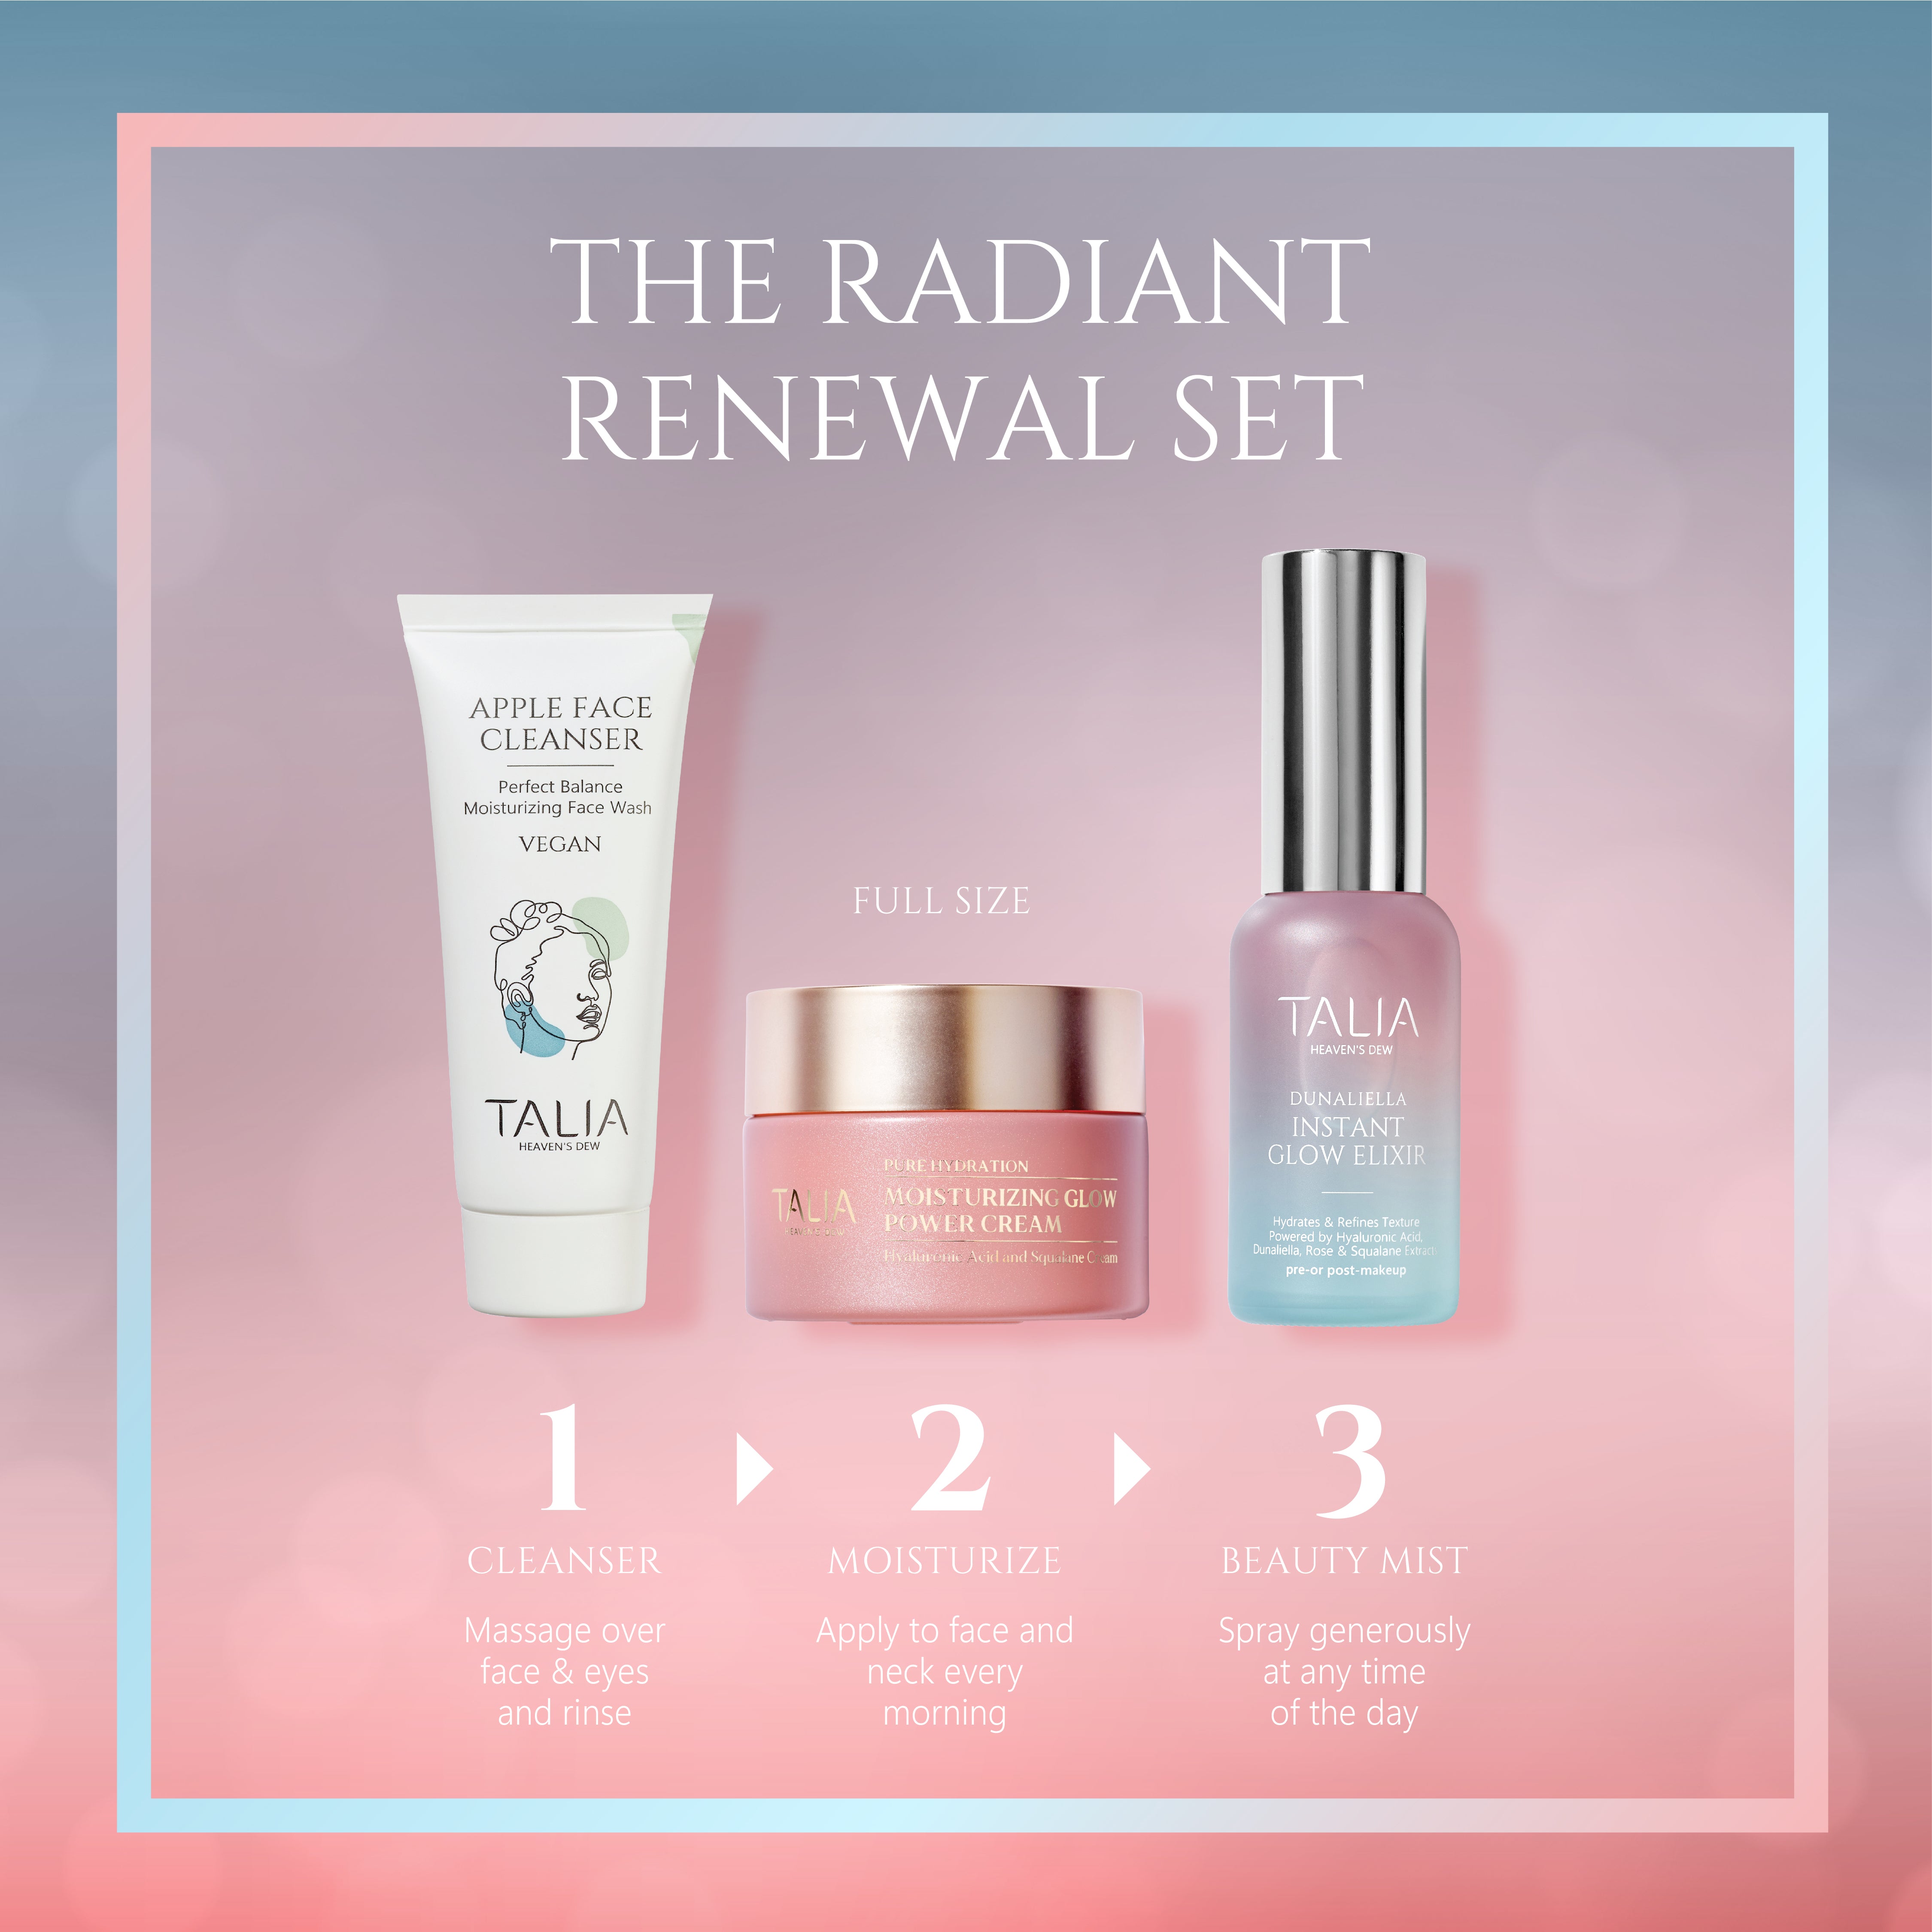 Radiant Renewal set